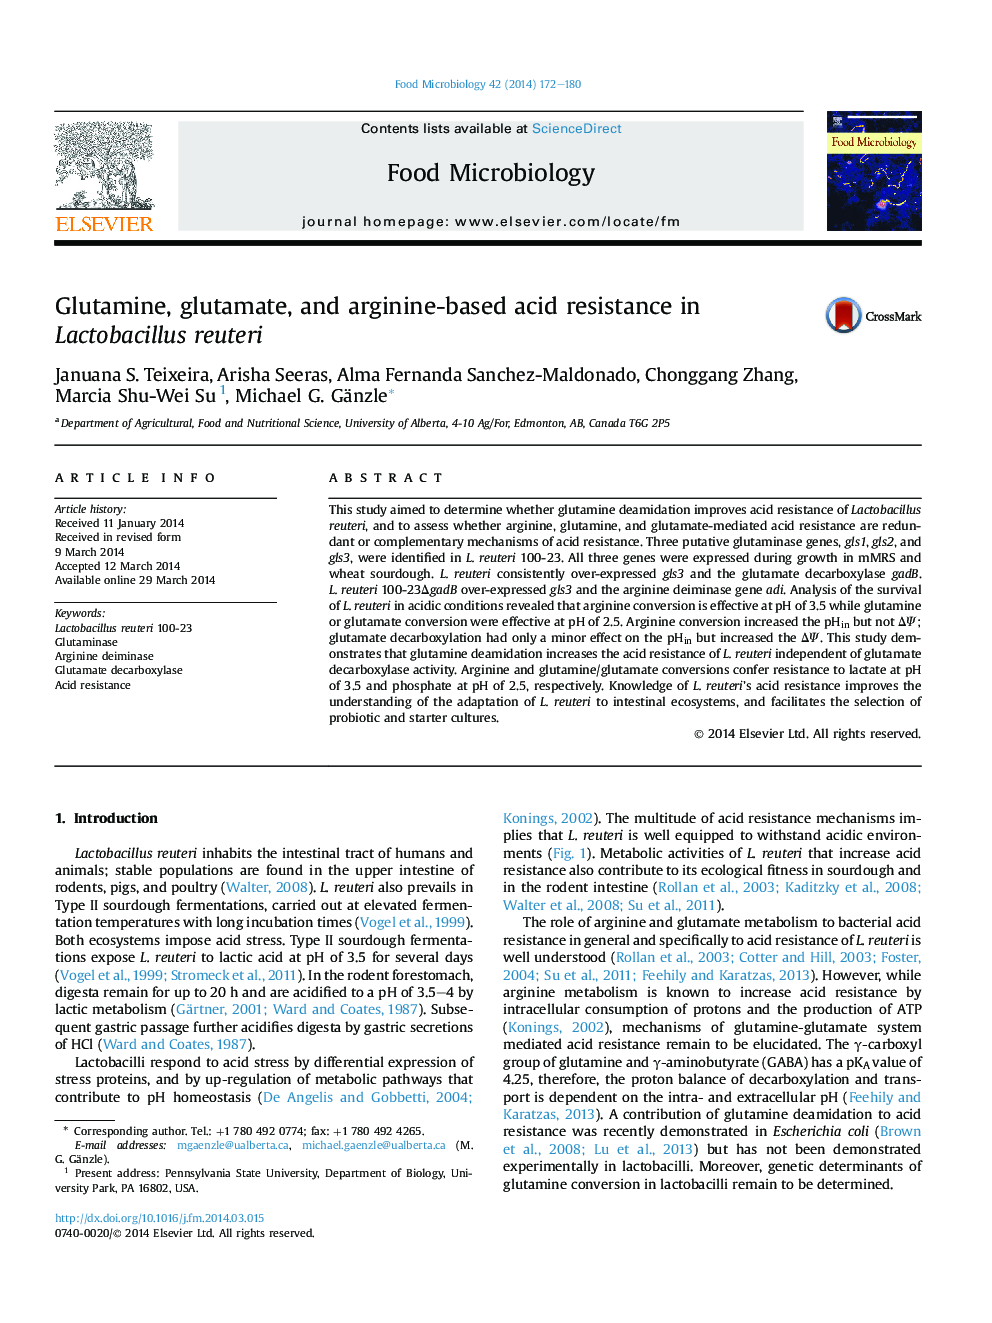 Glutamine, glutamate, and arginine-based acid resistance in Lactobacillus reuteri